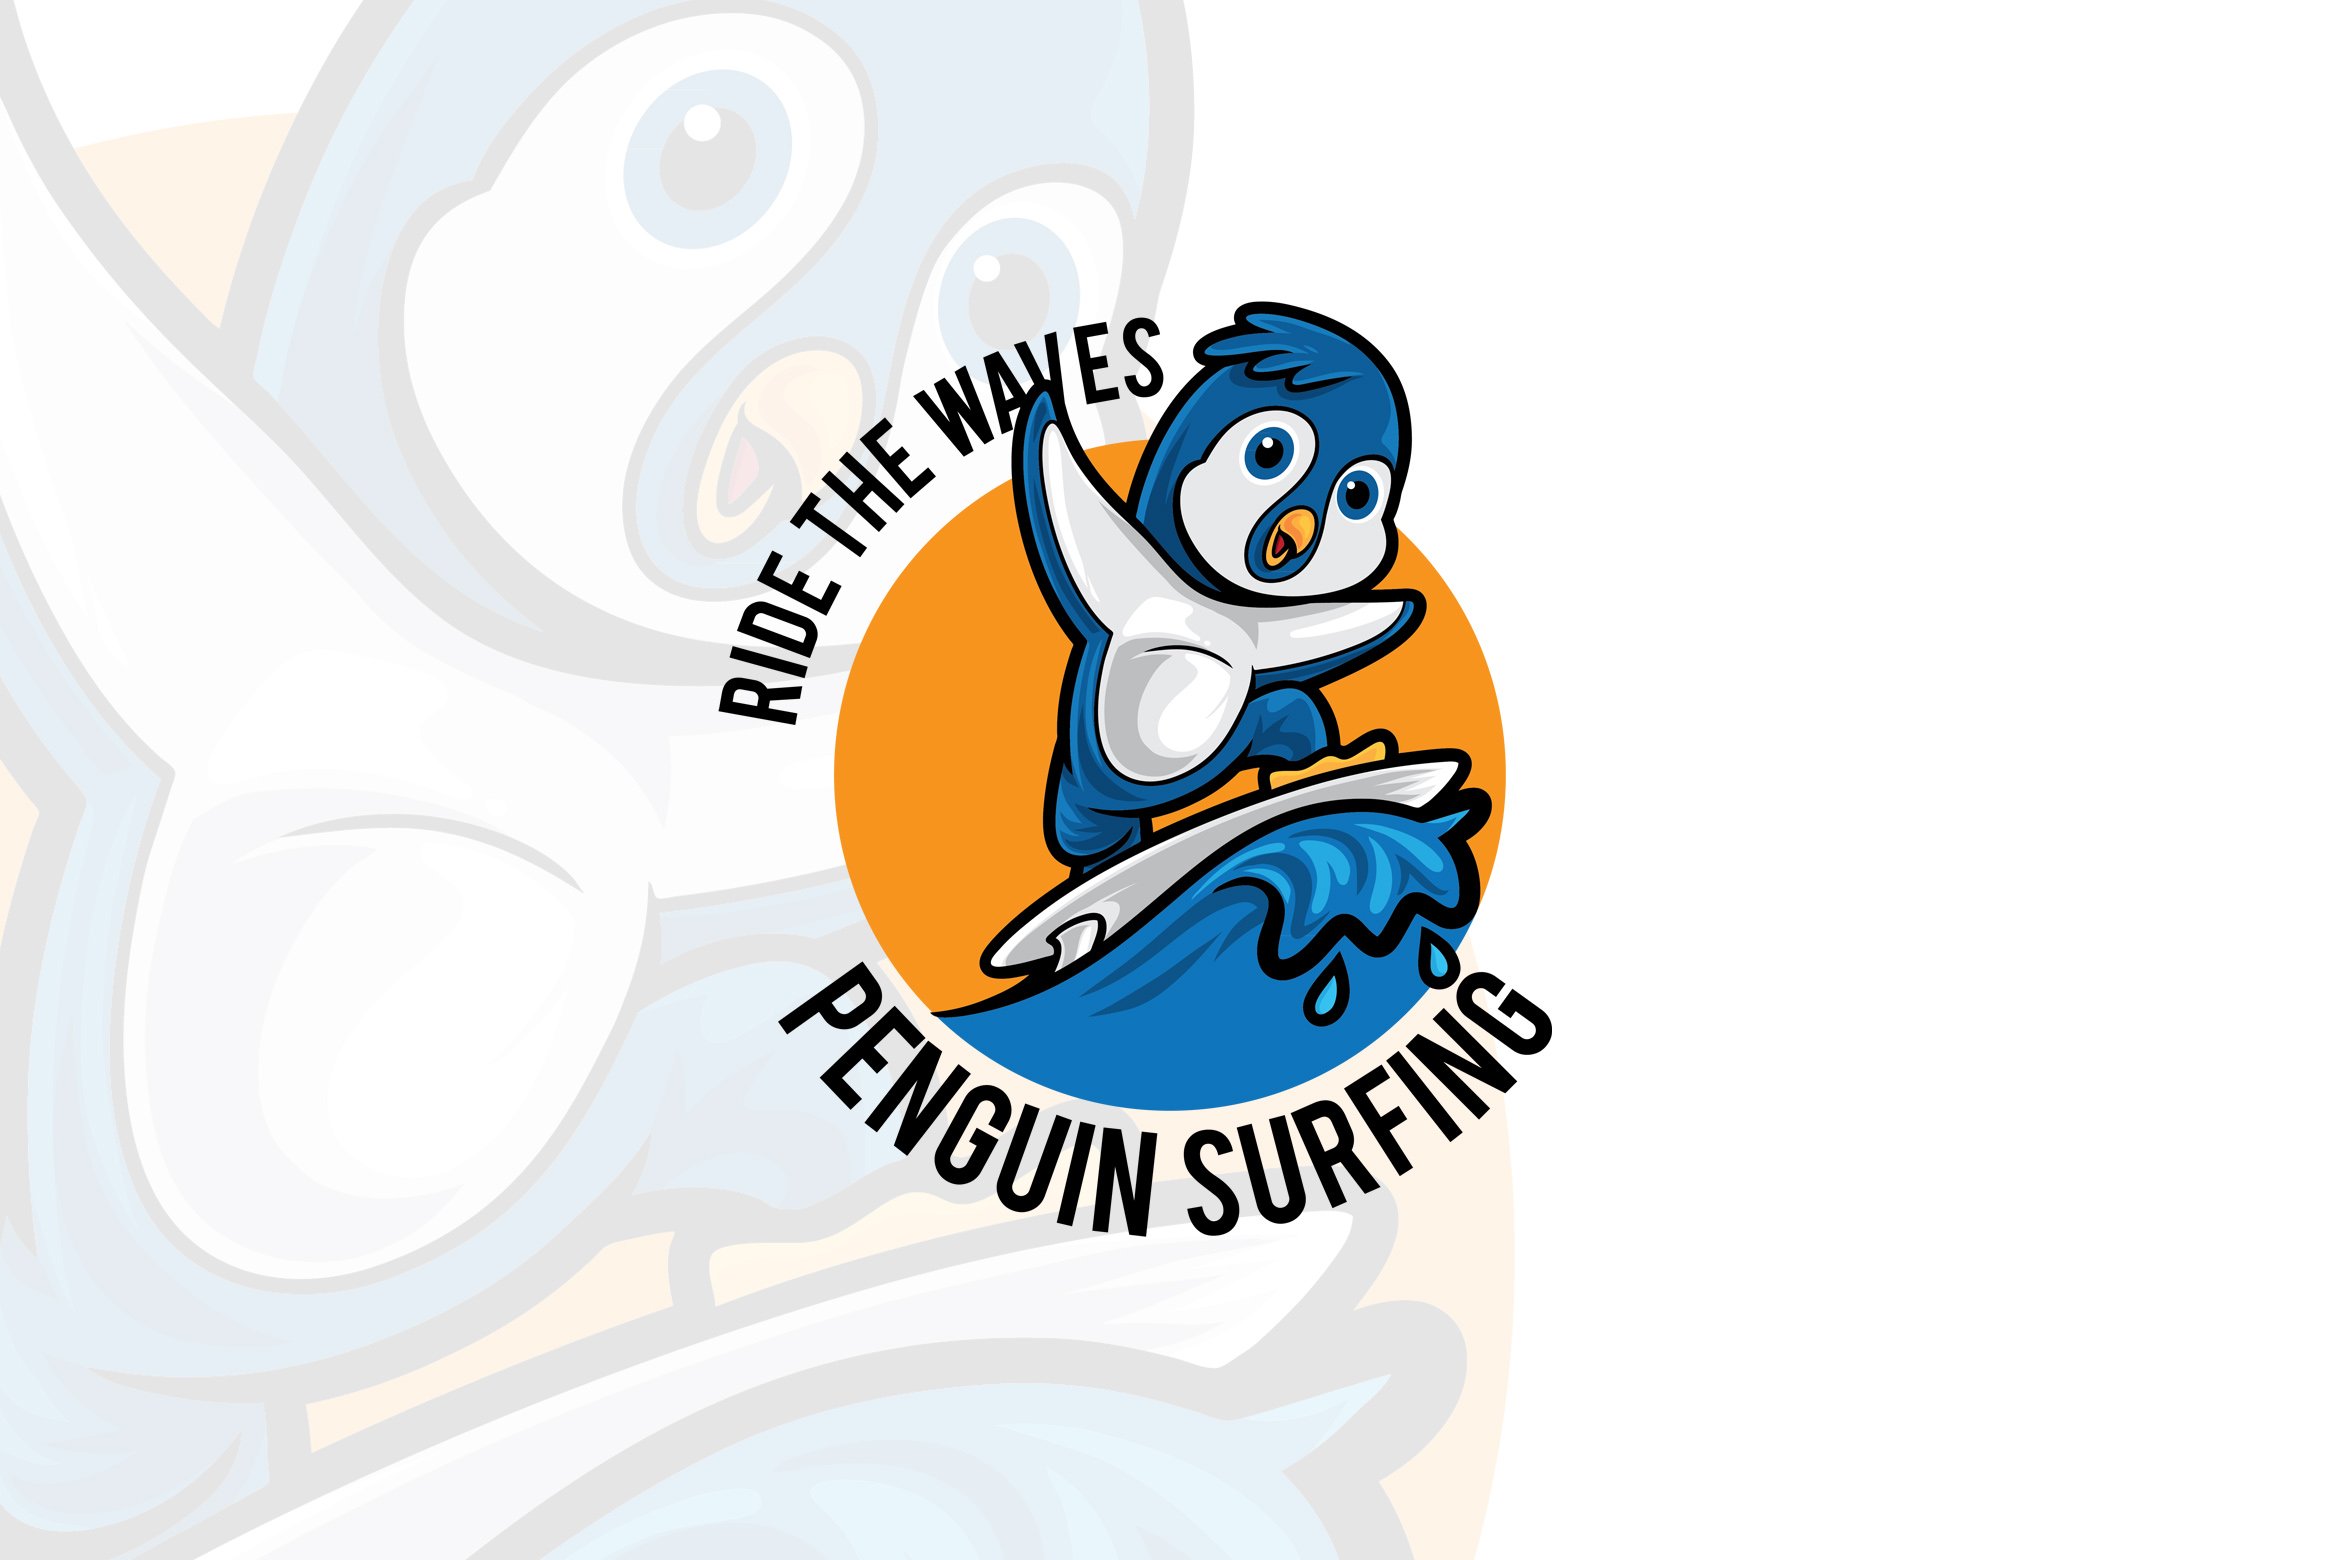 Penguin Surf Cartoon Mascot Logo cover image.